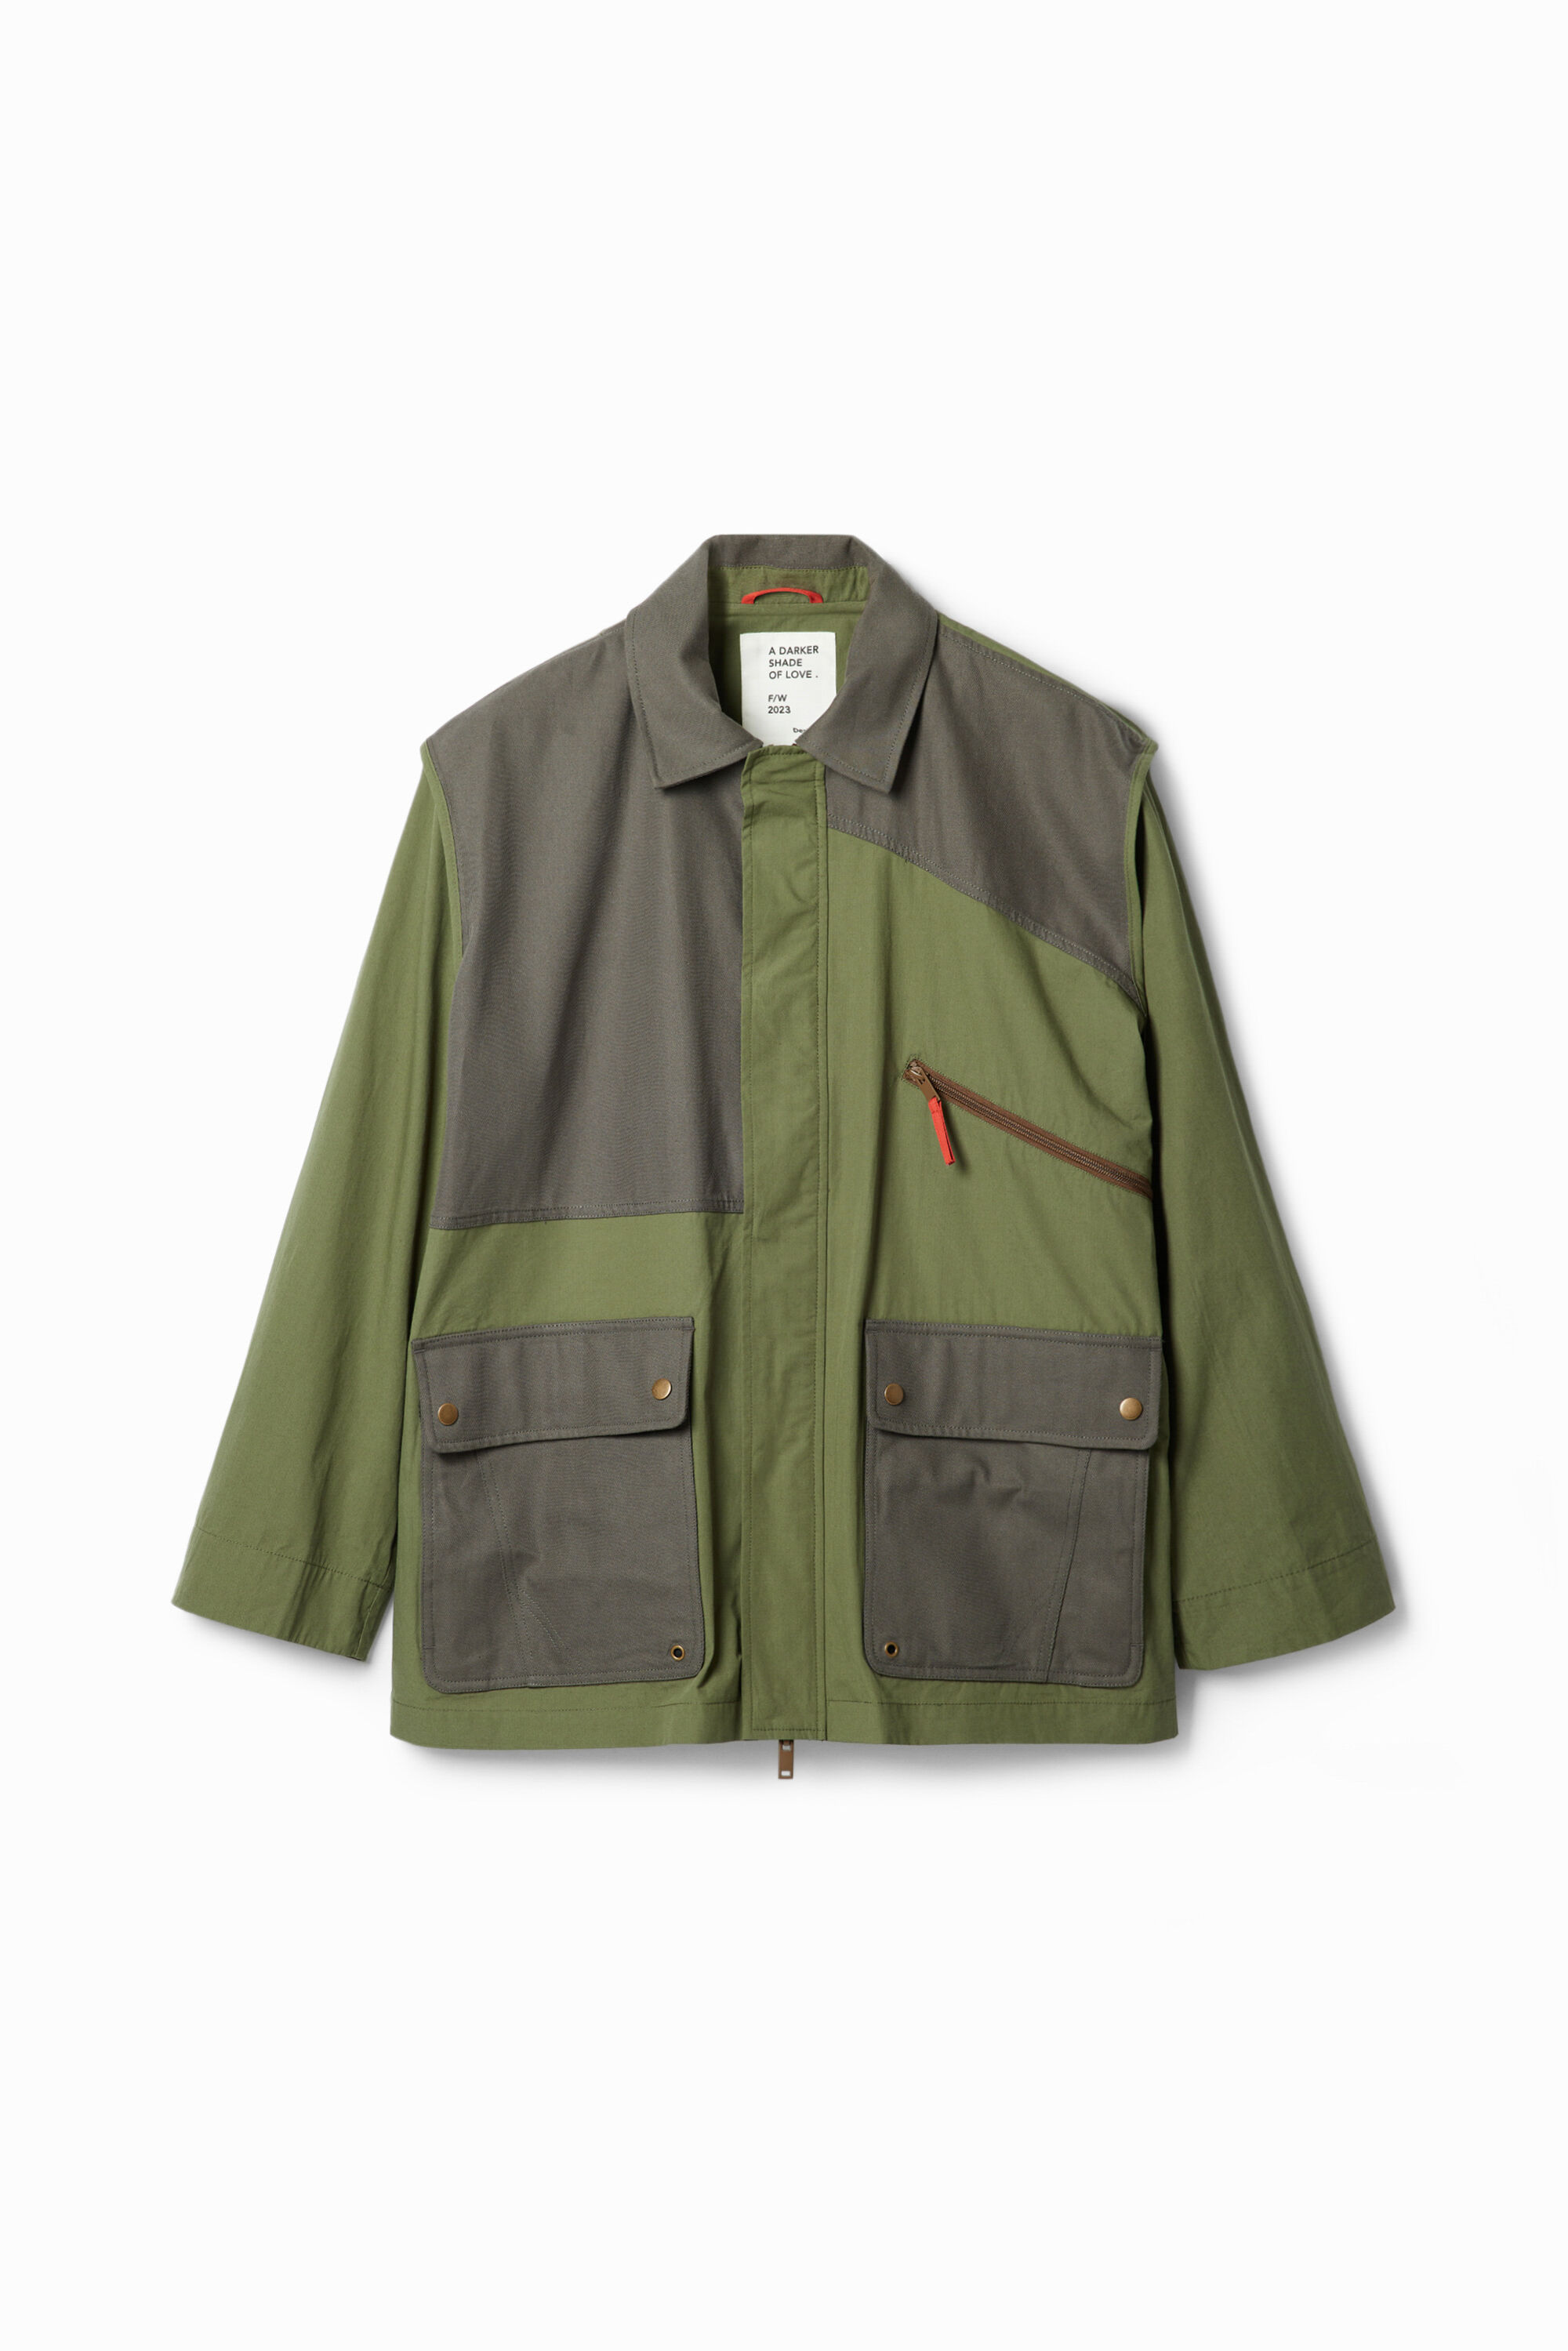 Desigual ADLEY men's two-tone green winter rain coat FW2923 collection